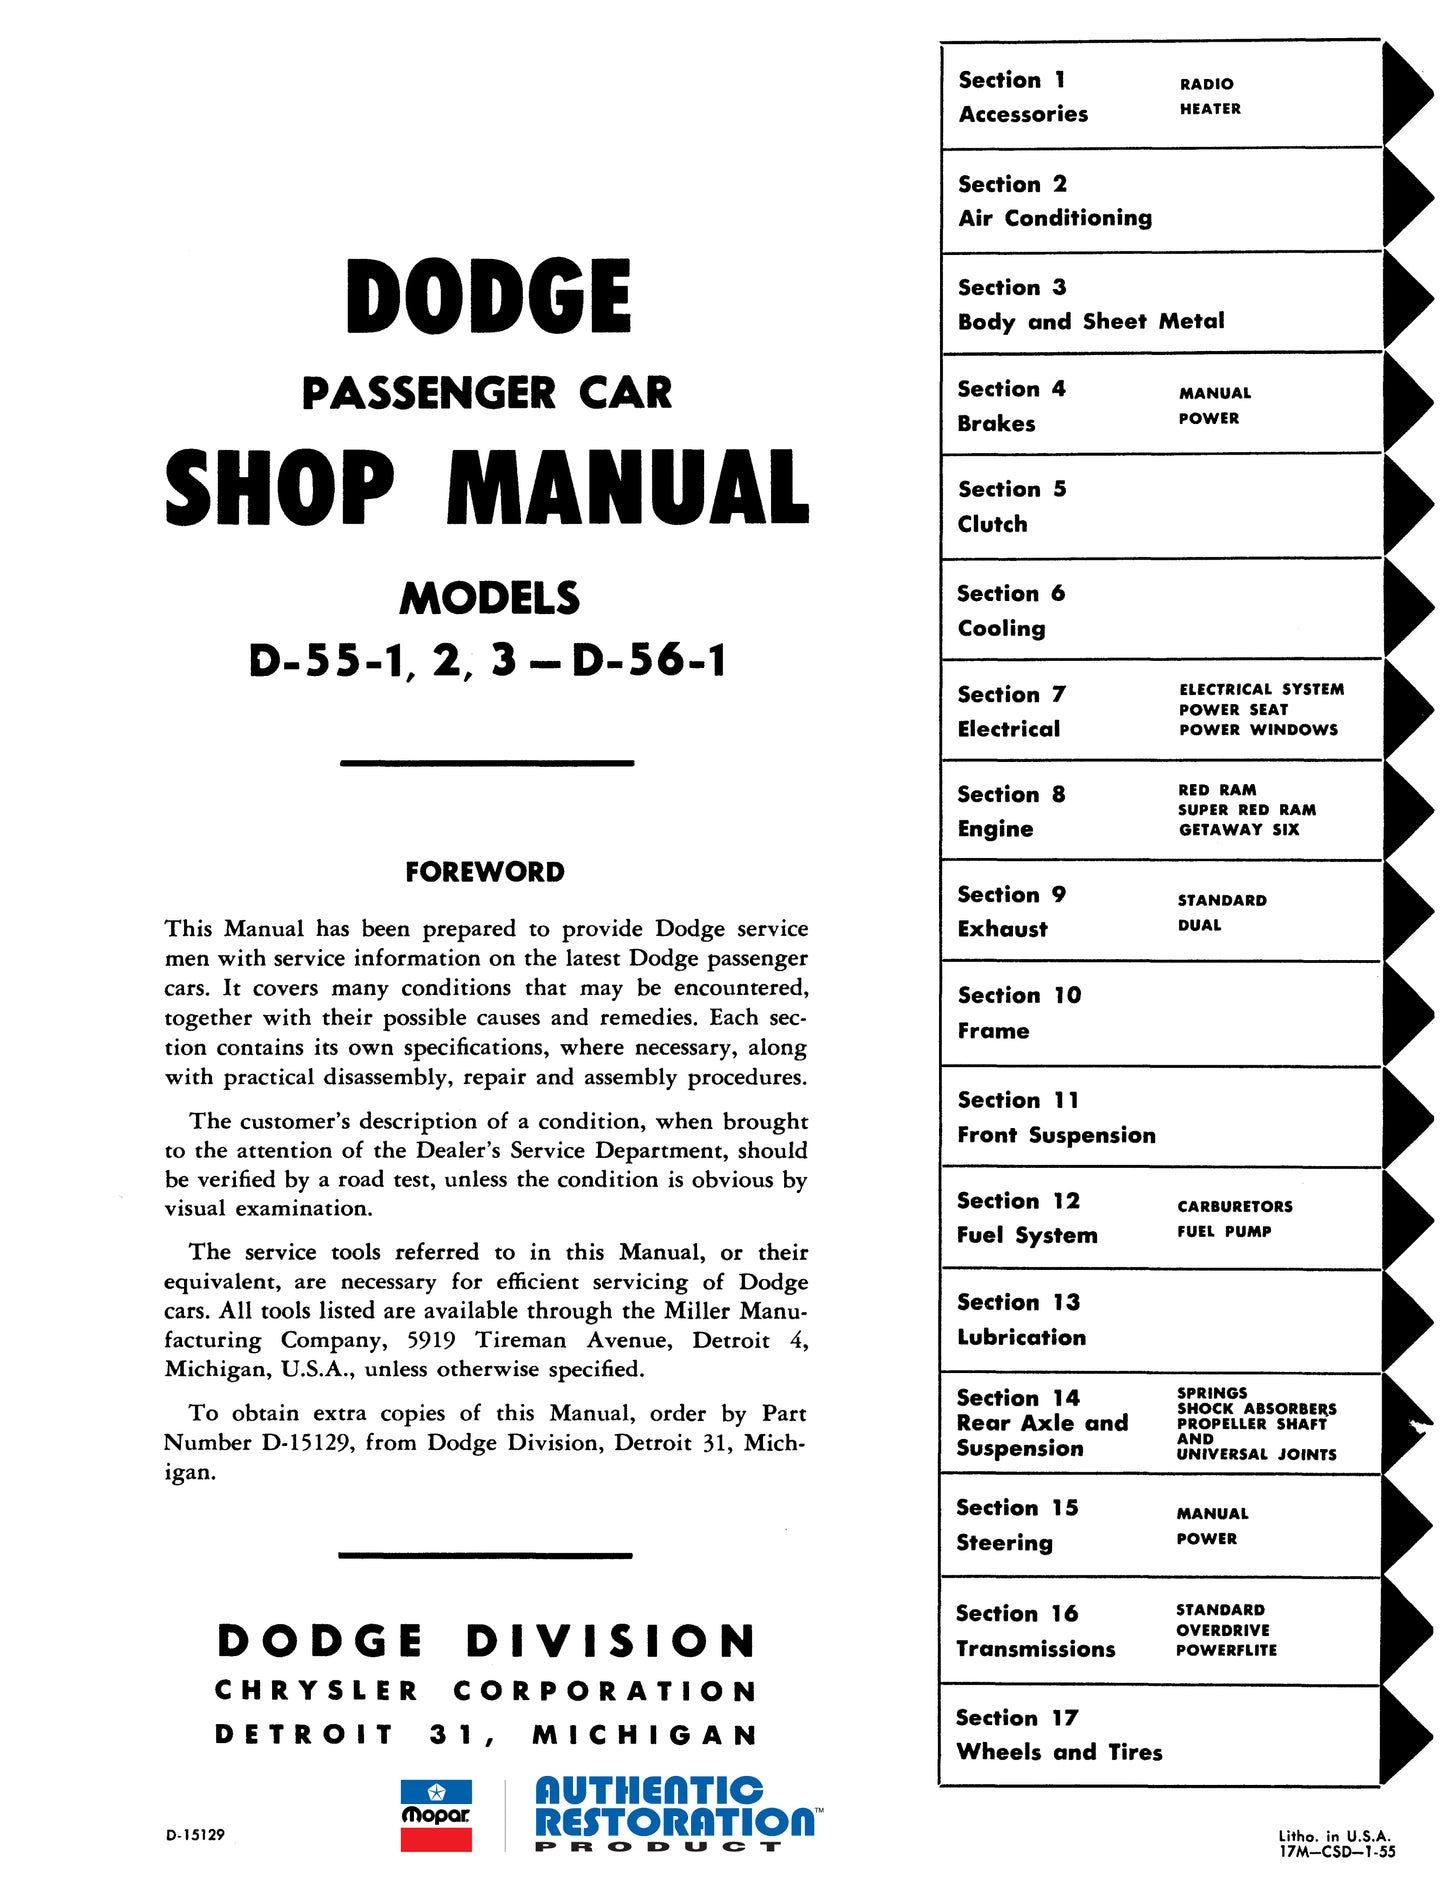 1955 Dodge Service Manual - All Models